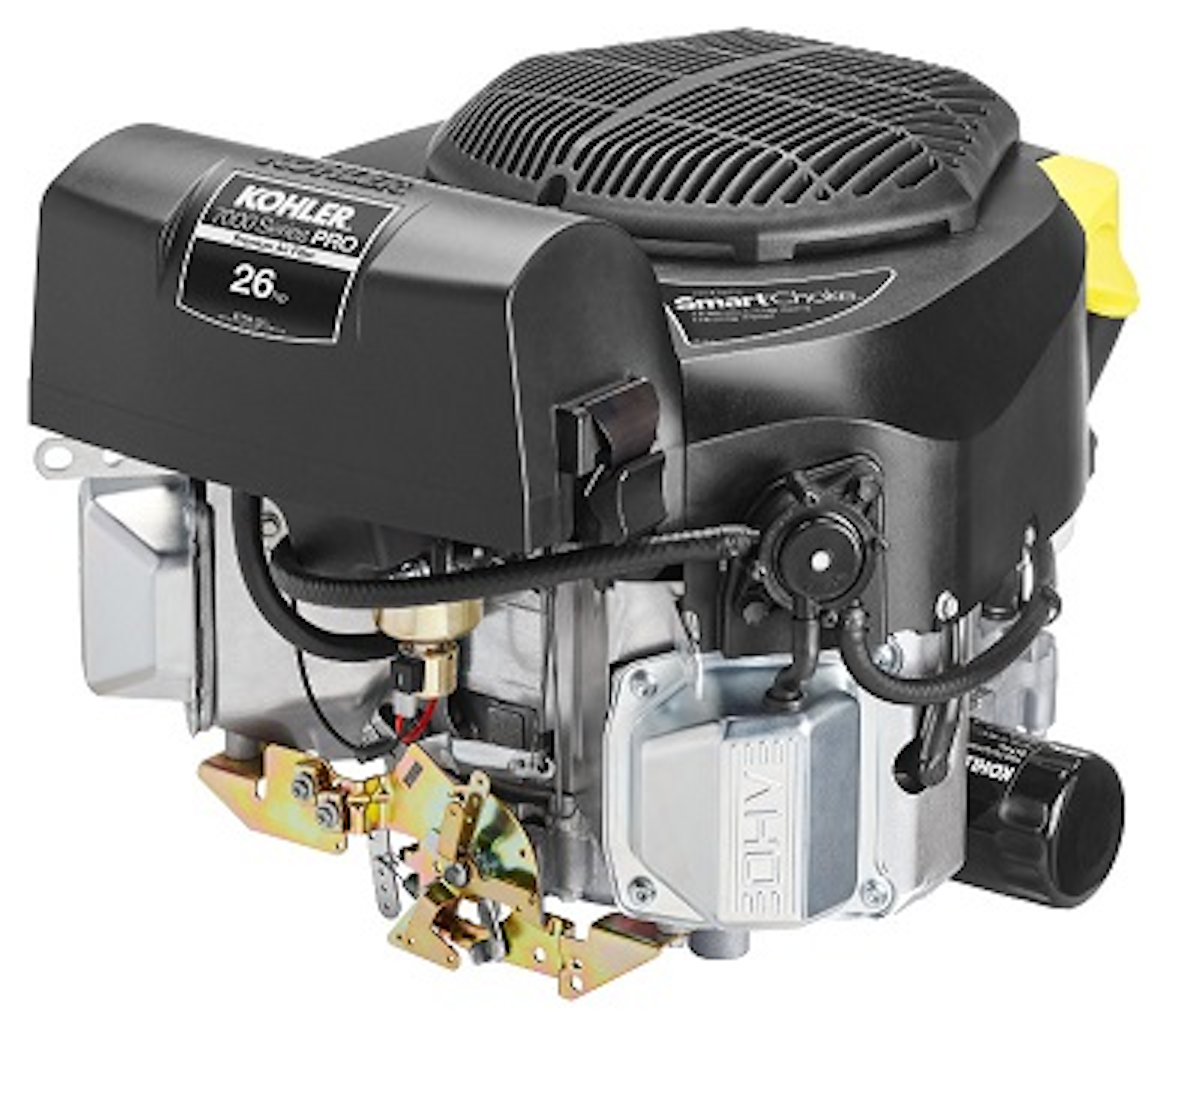 Kohler 7000 Series Pro Engine From: Kohler Engines | Green Industry Pros